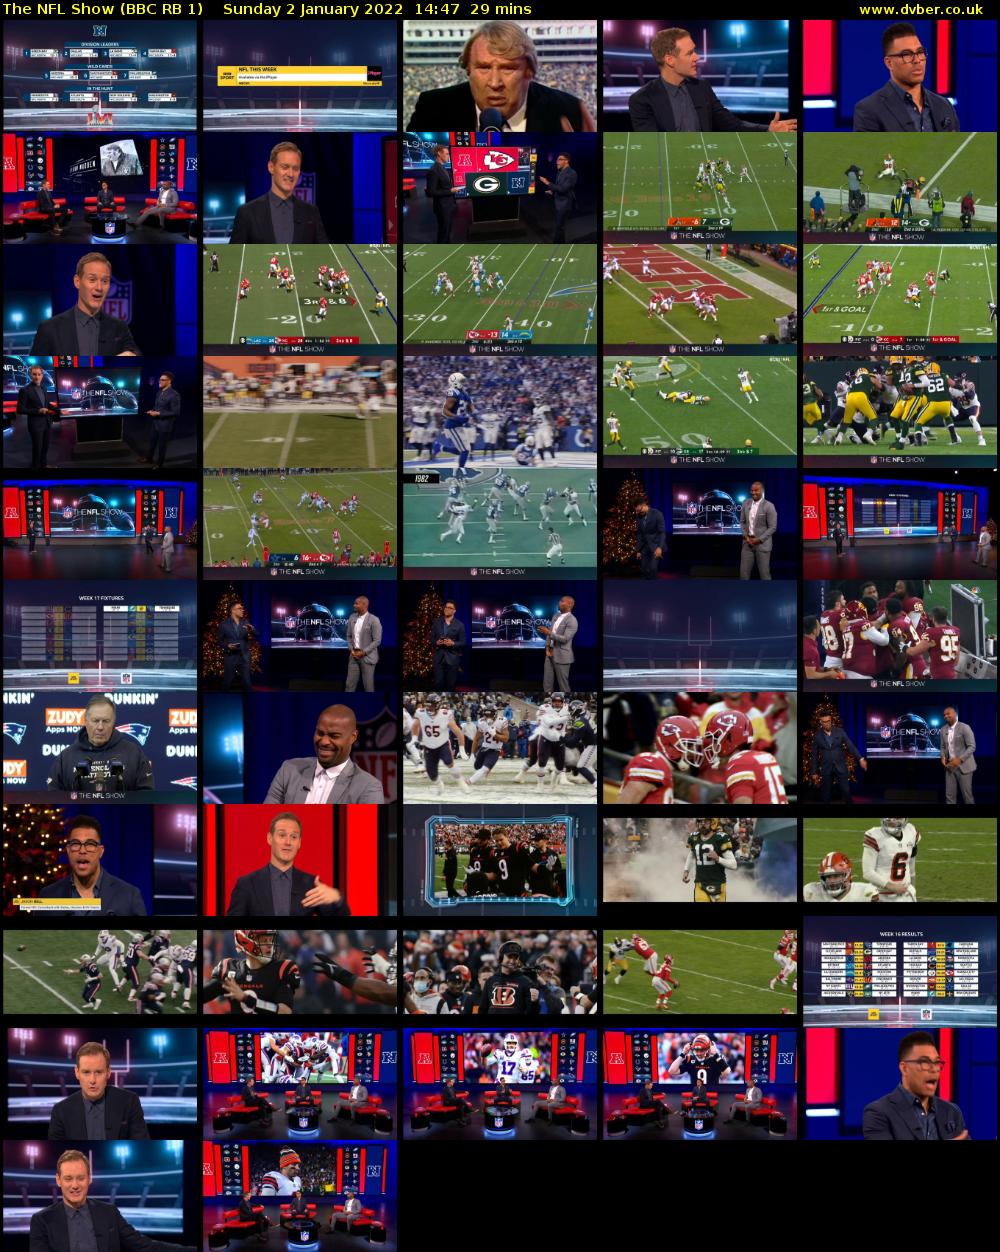 The NFL Show (BBC RB 1) Sunday 2 January 2022 14:47 - 15:16